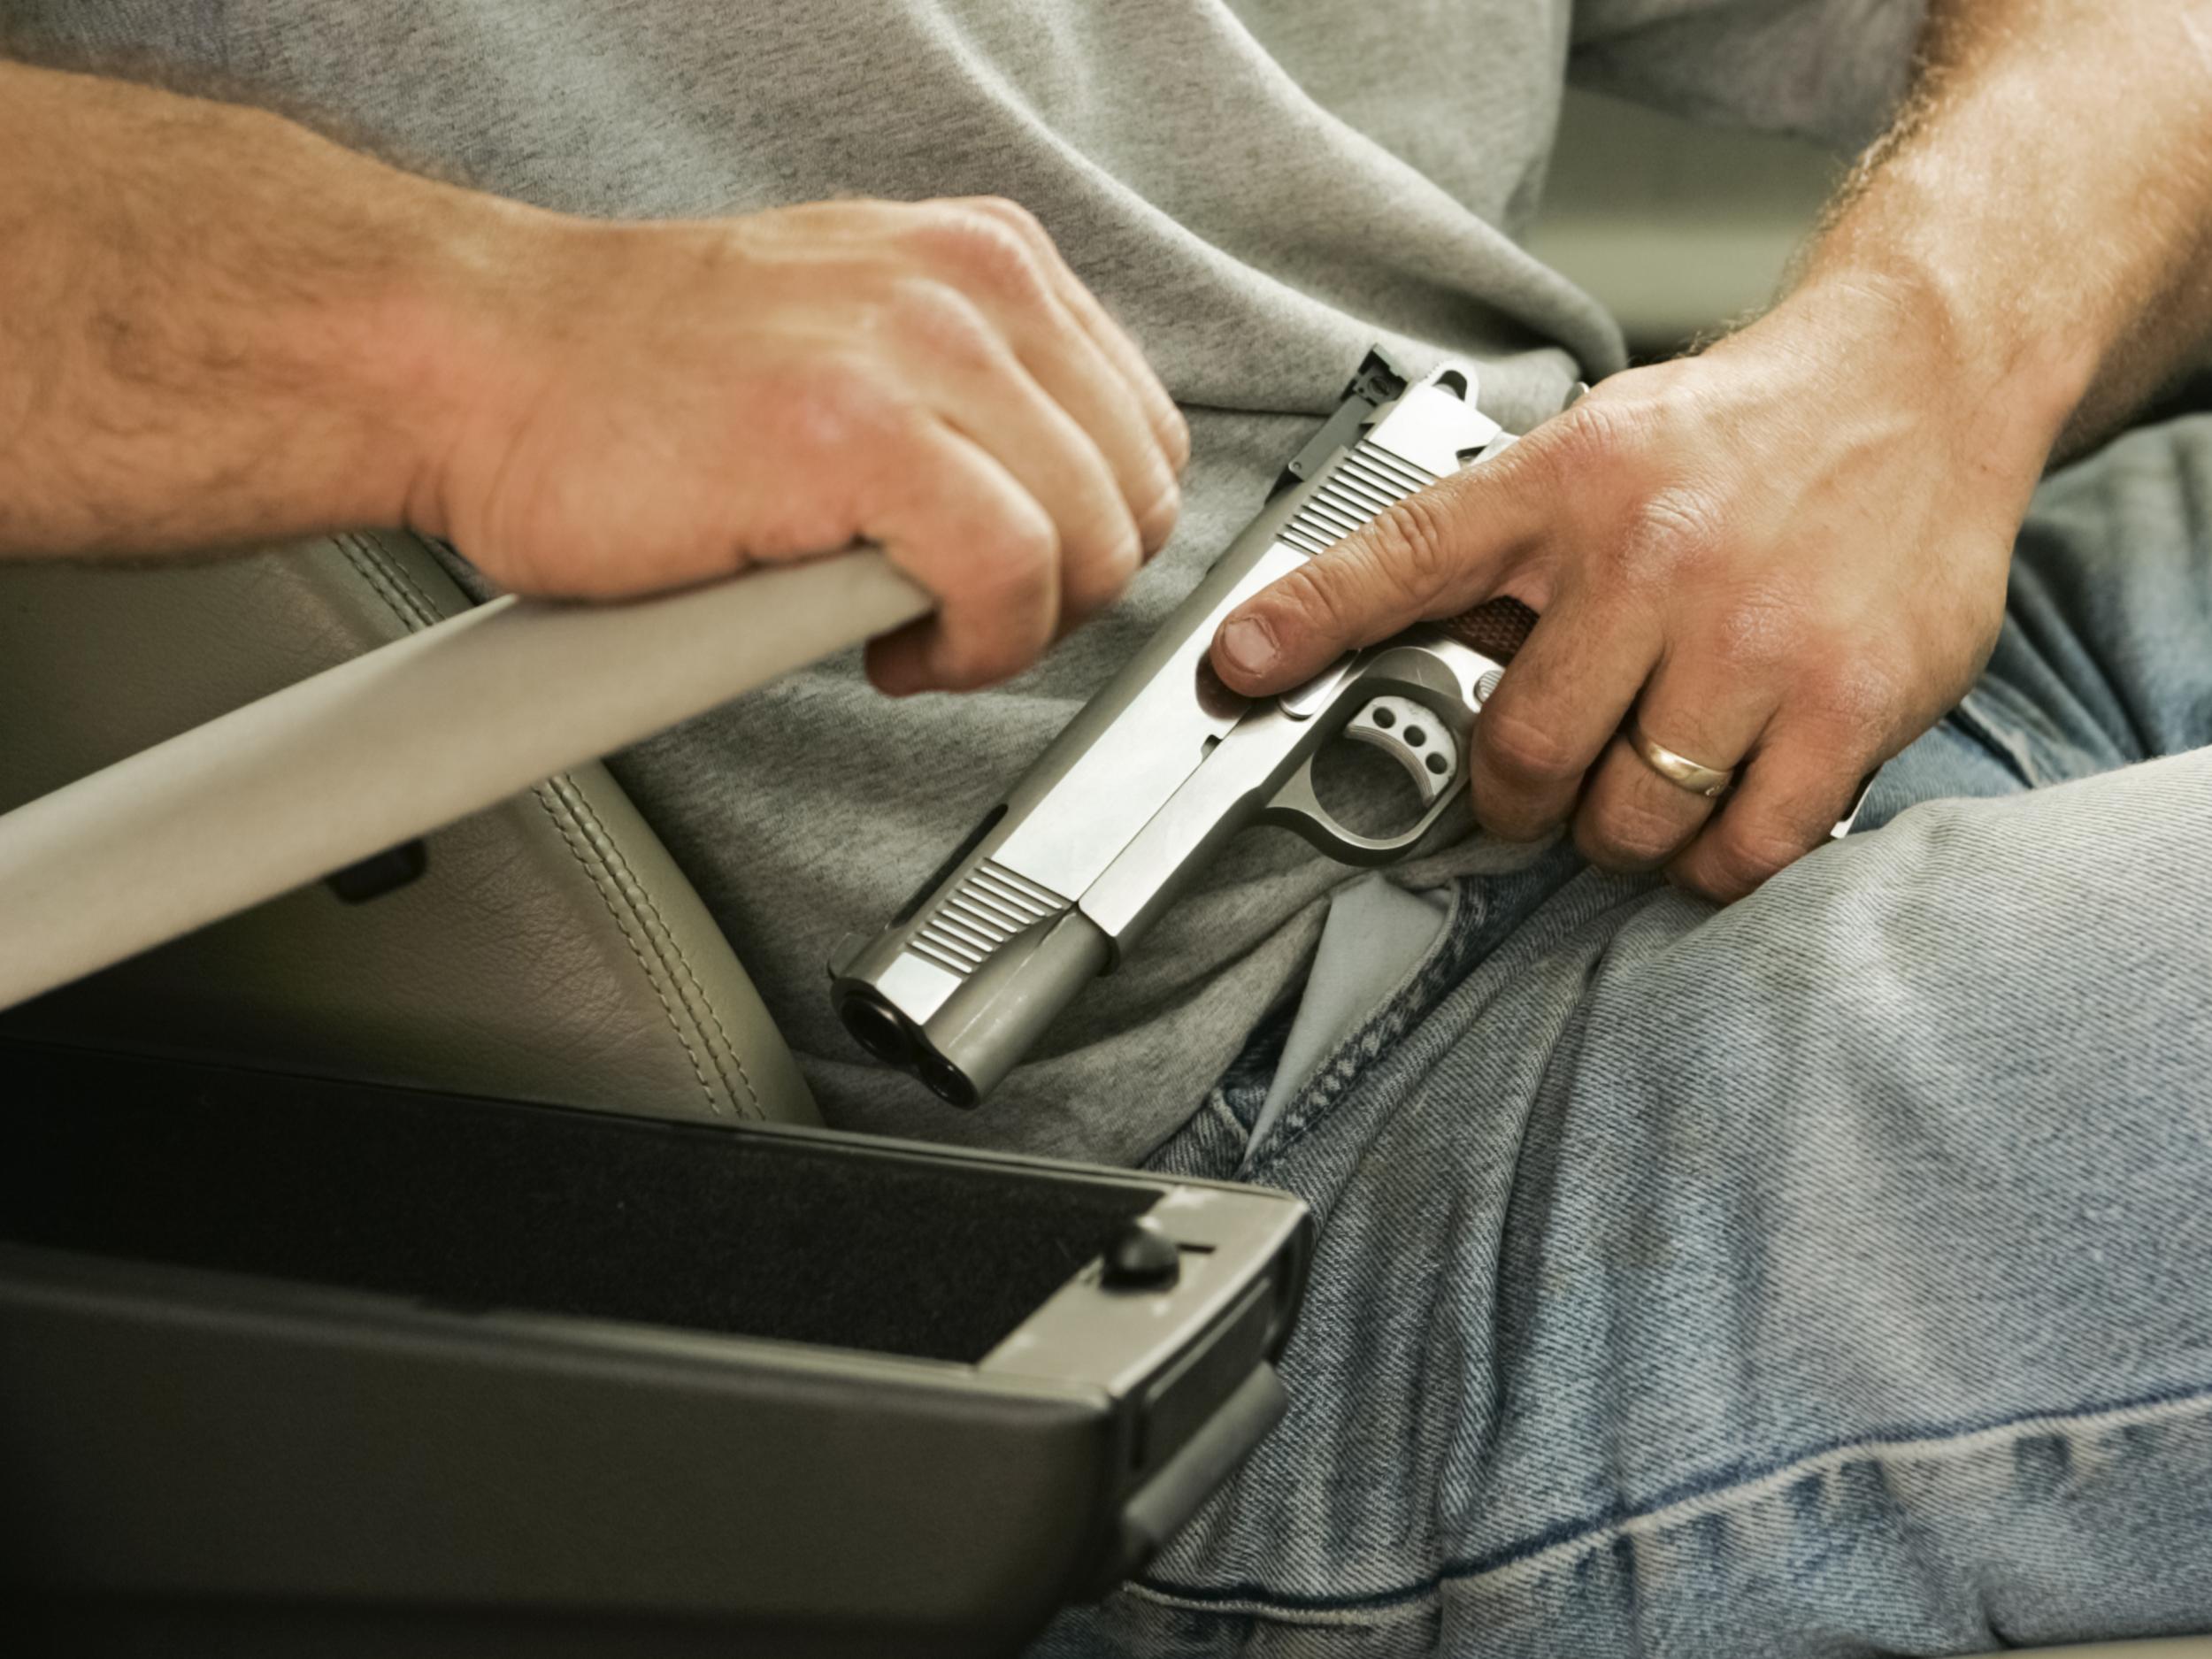 Man was not licensed to carry handgun